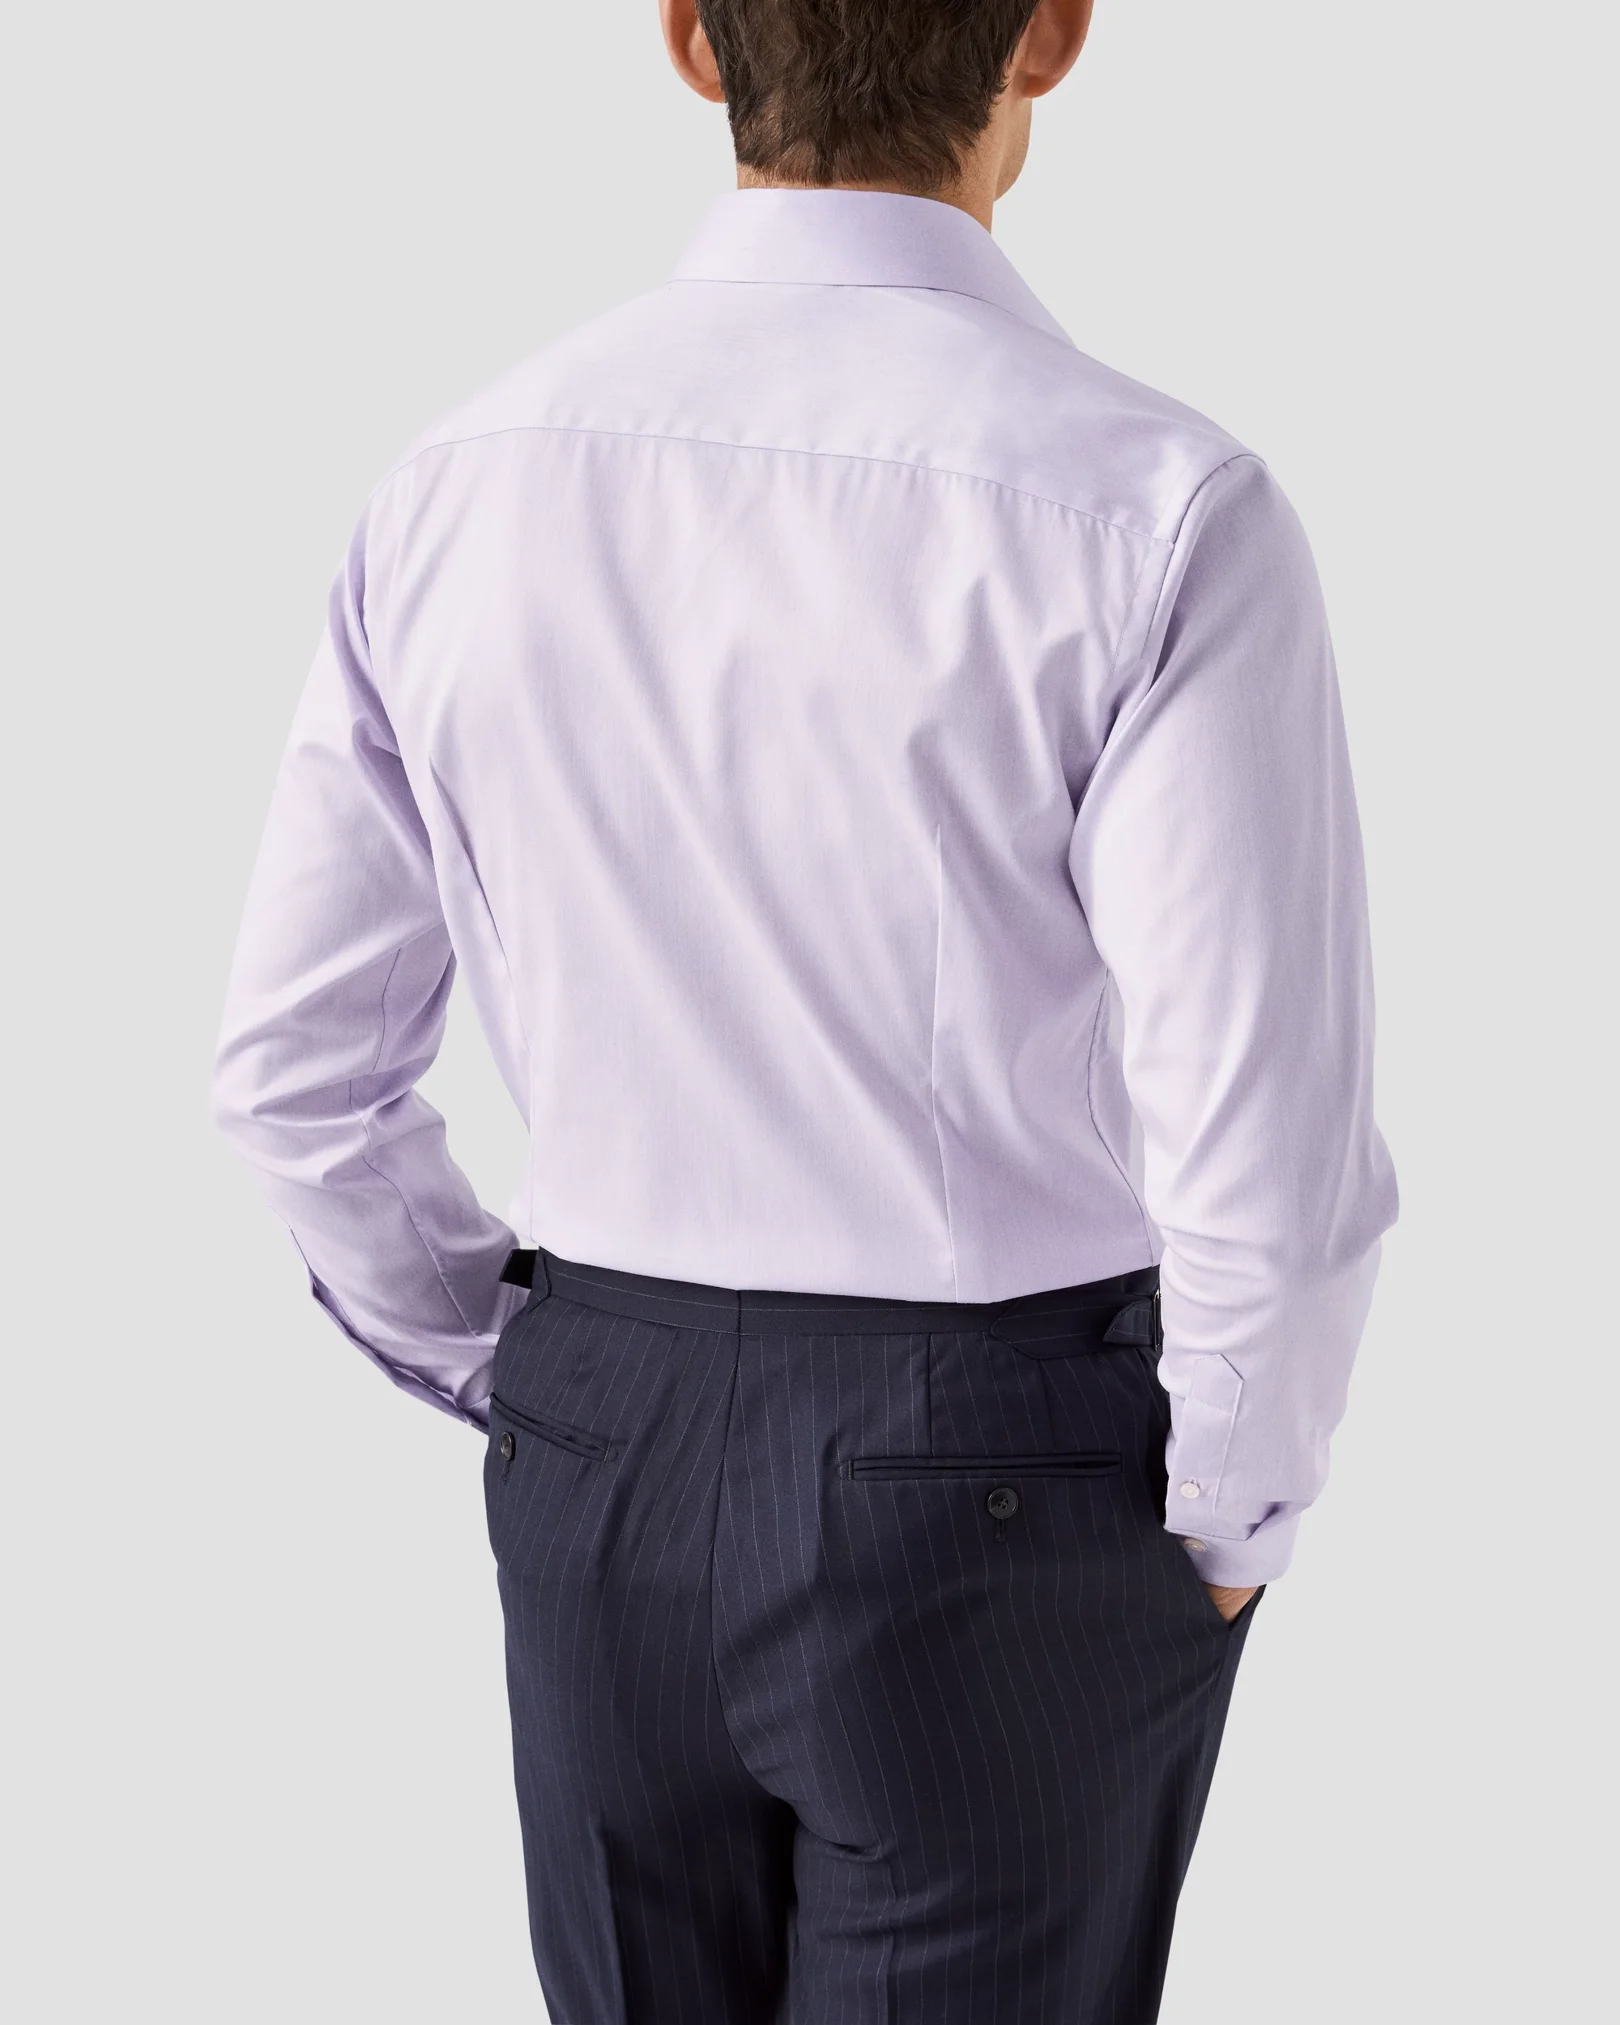 Eton - purple shirt signature twill